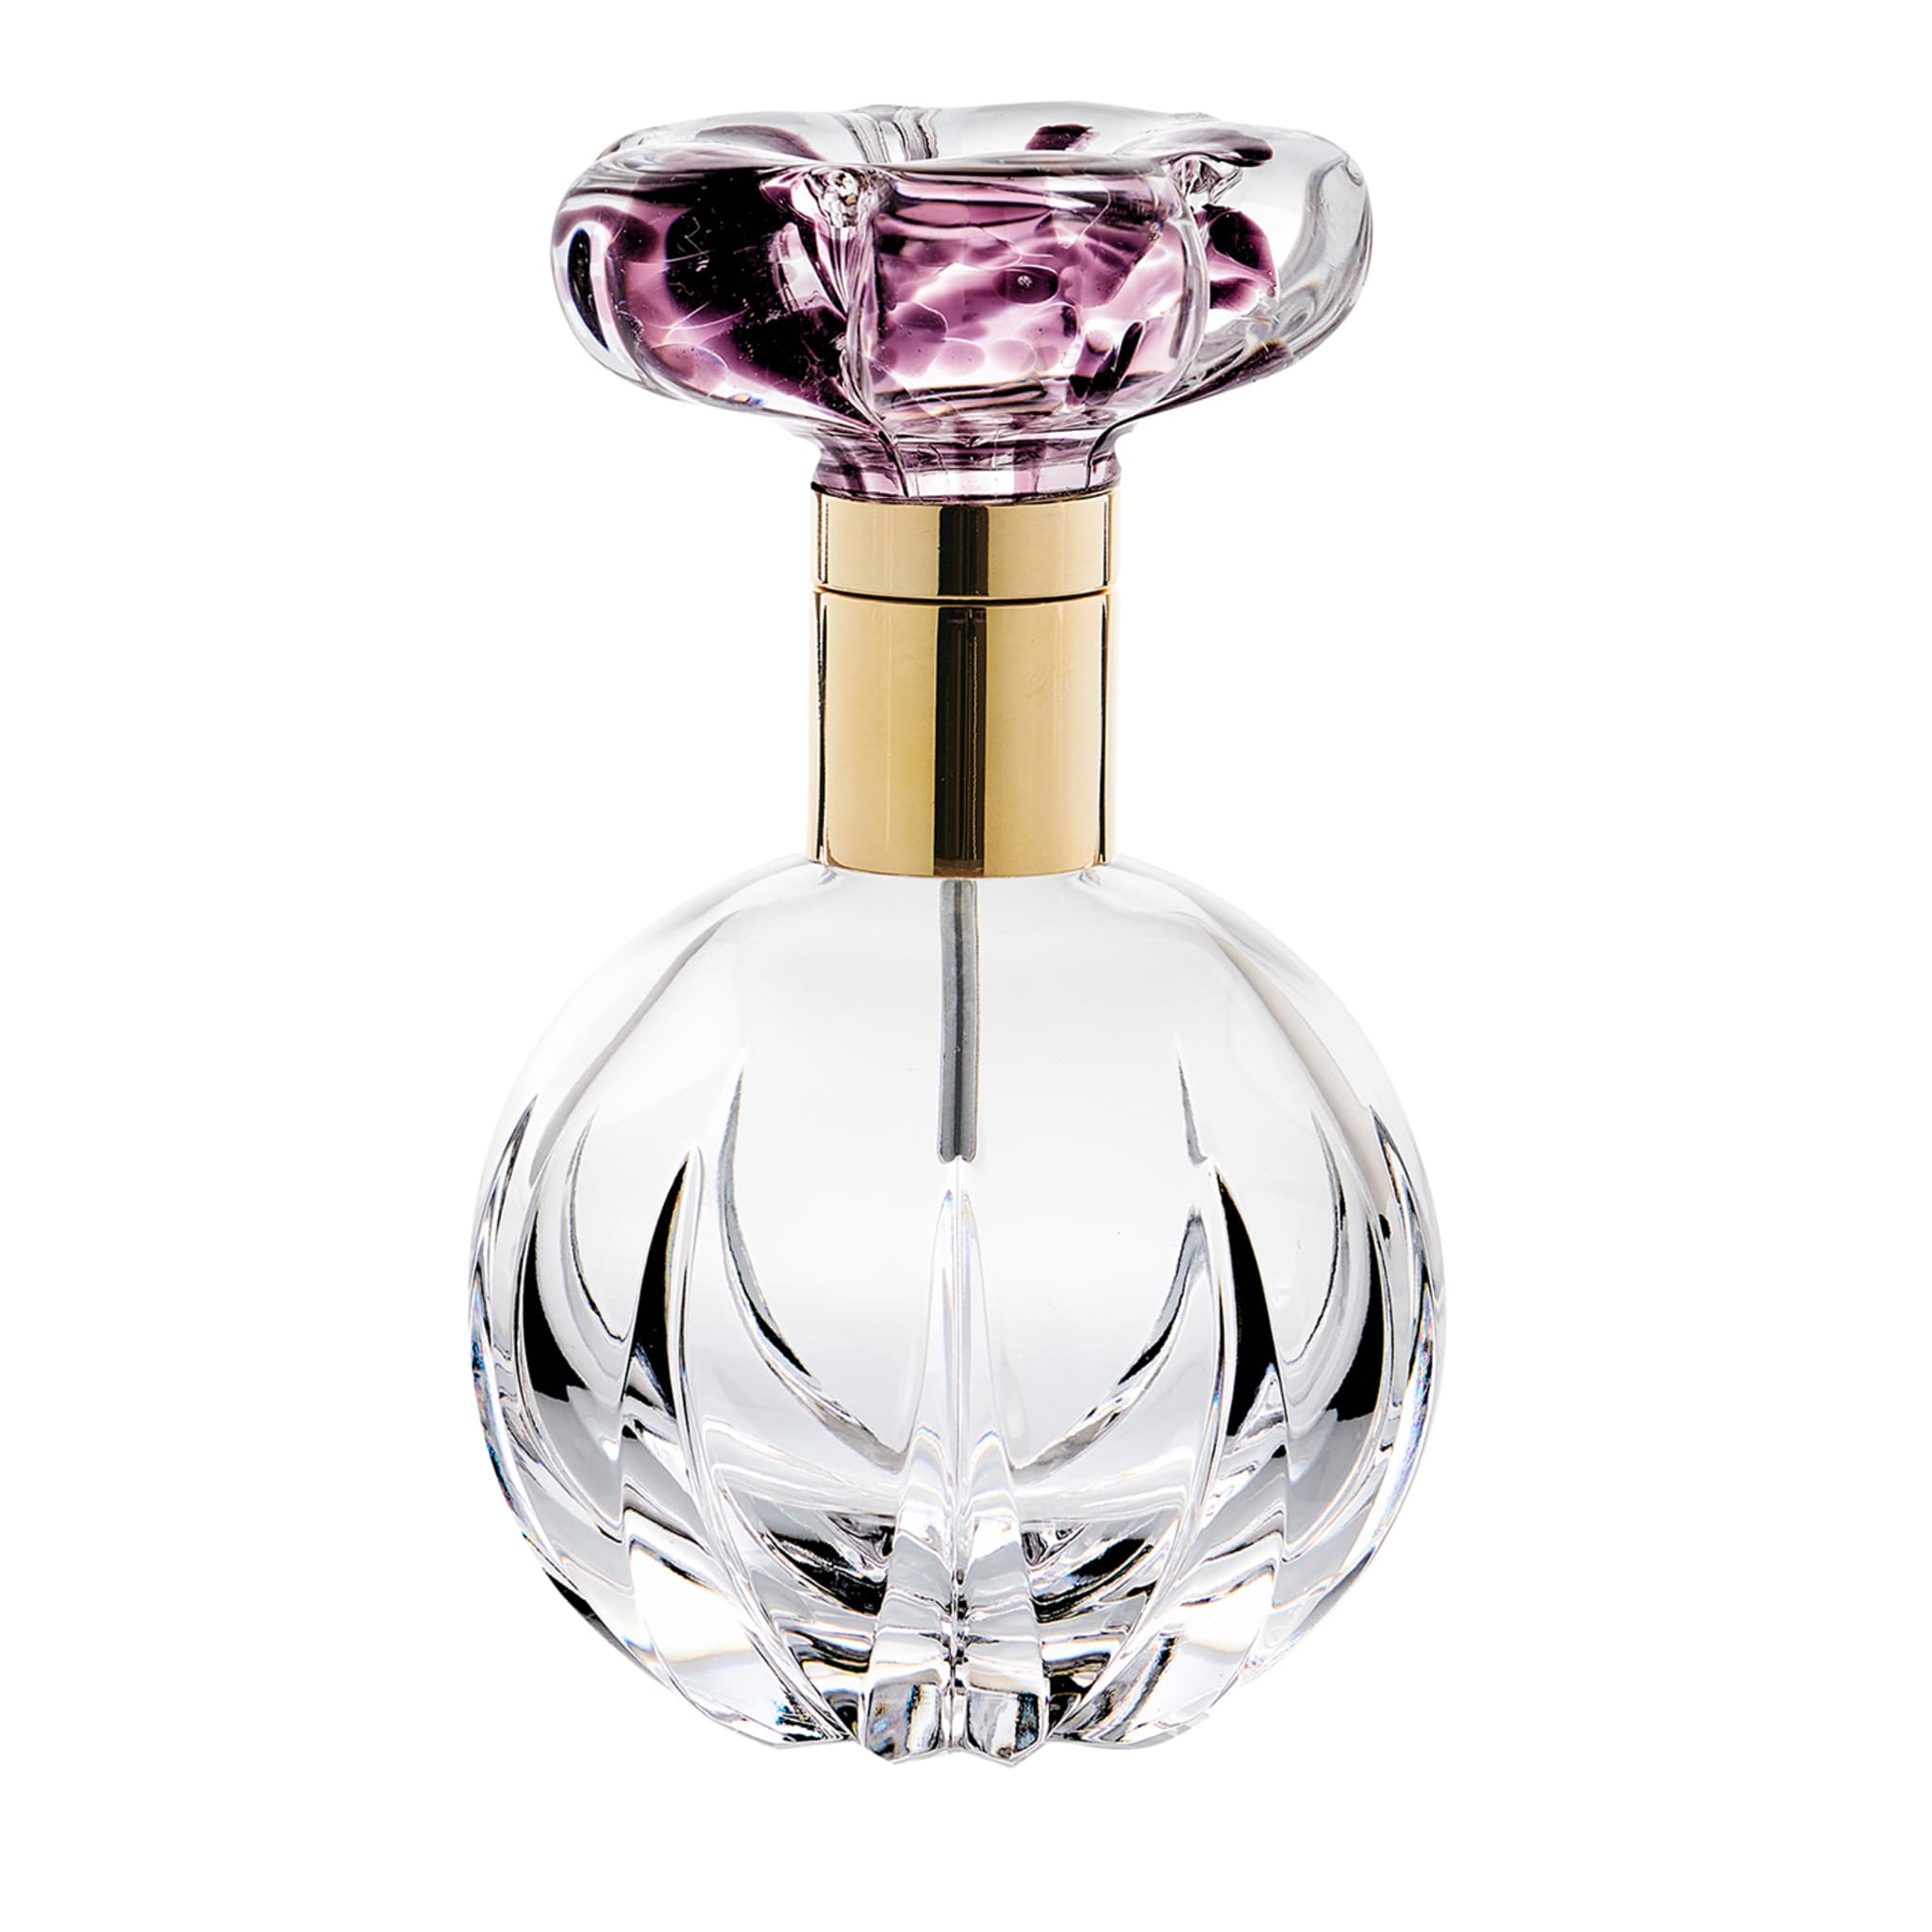 Cistus perfume bottle with amethyst flower Mario Cioni & C